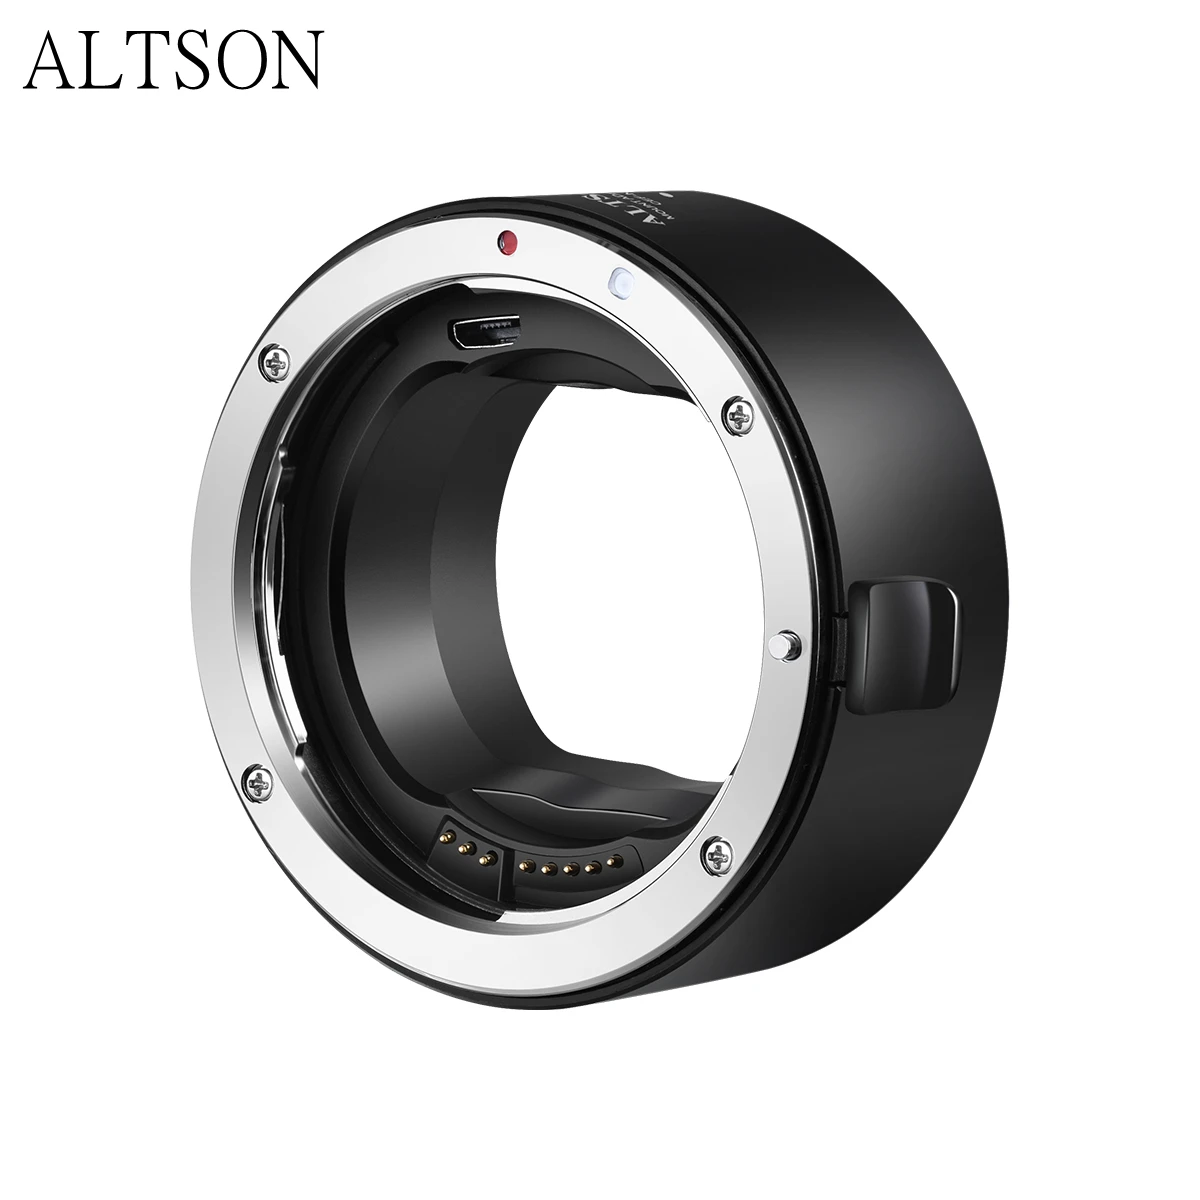 

Altson CEF-NZ AF Camera Lens Adapter Auto Focus Adapter Ring for Canon EOS EF EF-S Sigma Lens to Nikon Z Mount Cameras Z6 Z7